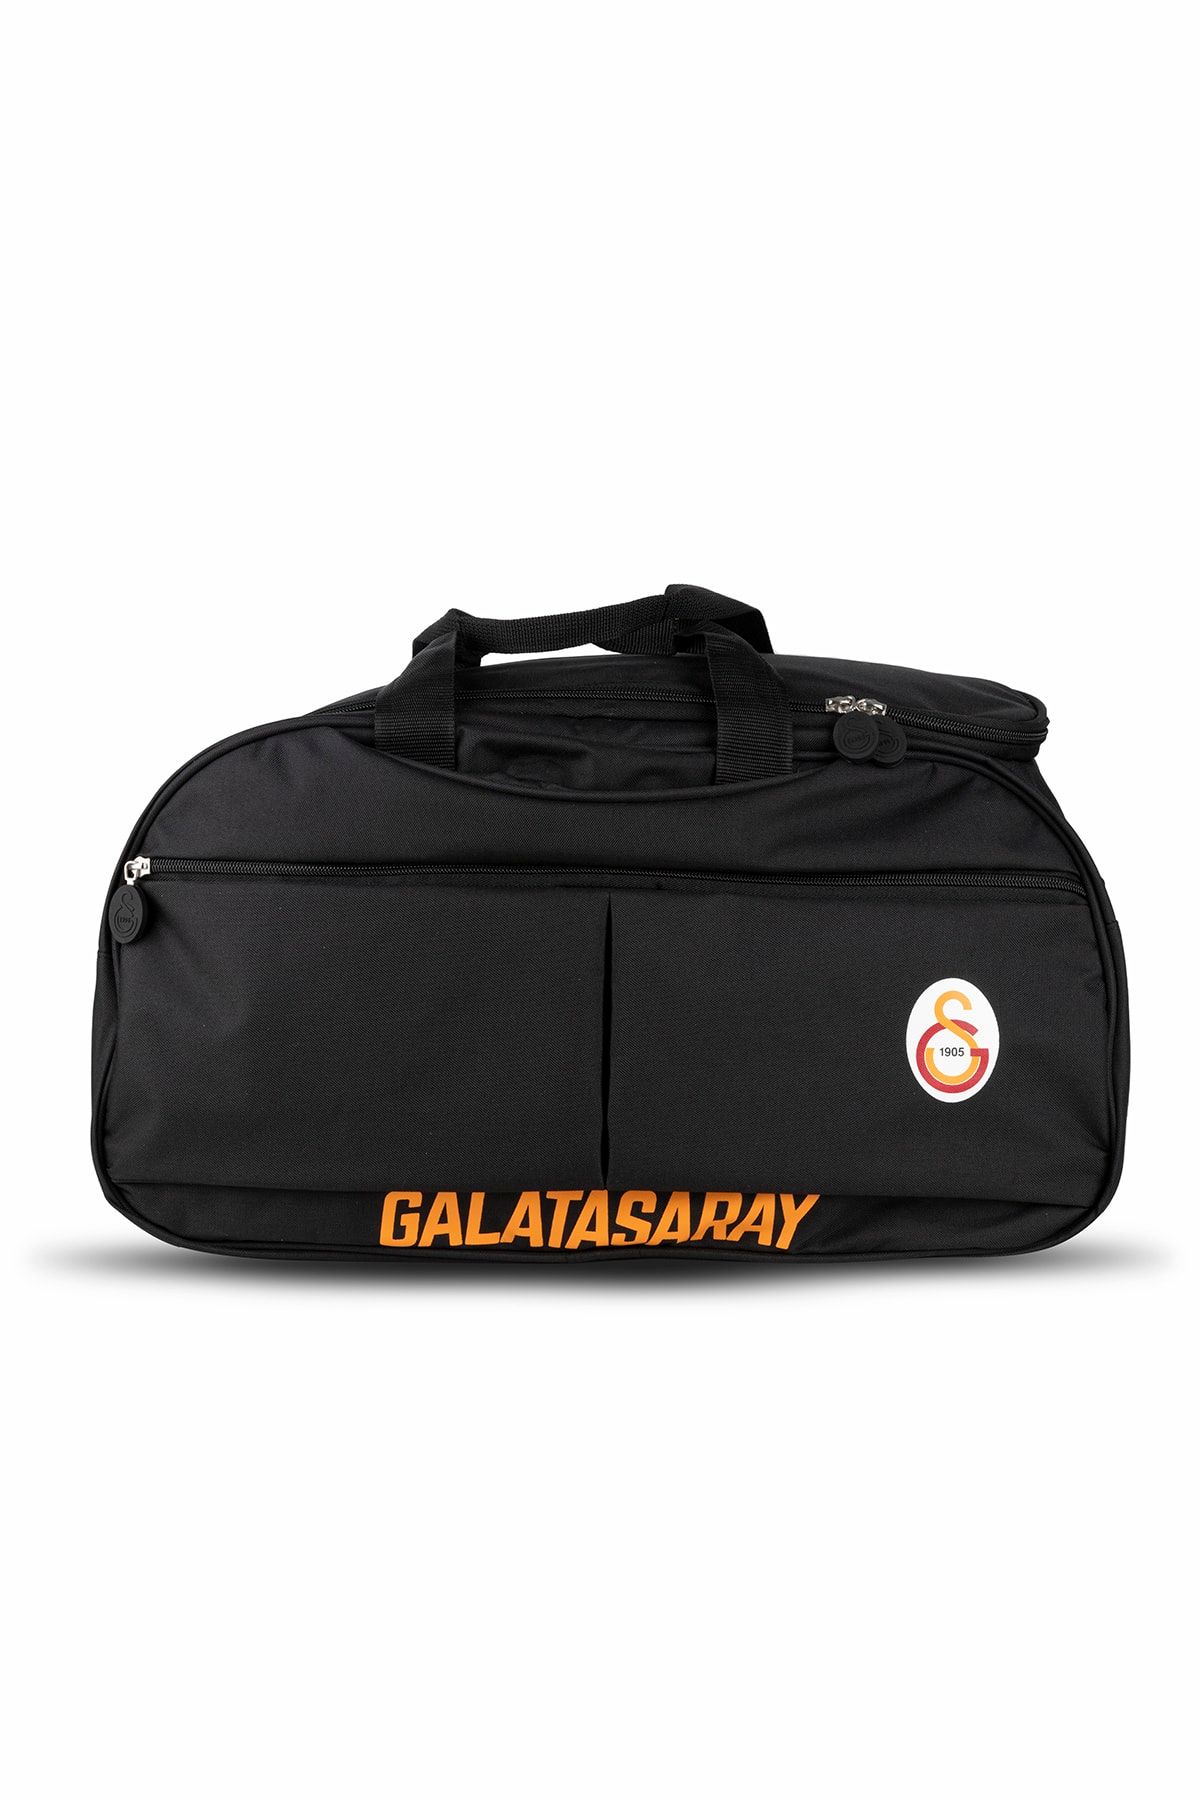 Galatasaray Garni Spor Çantası Siyah